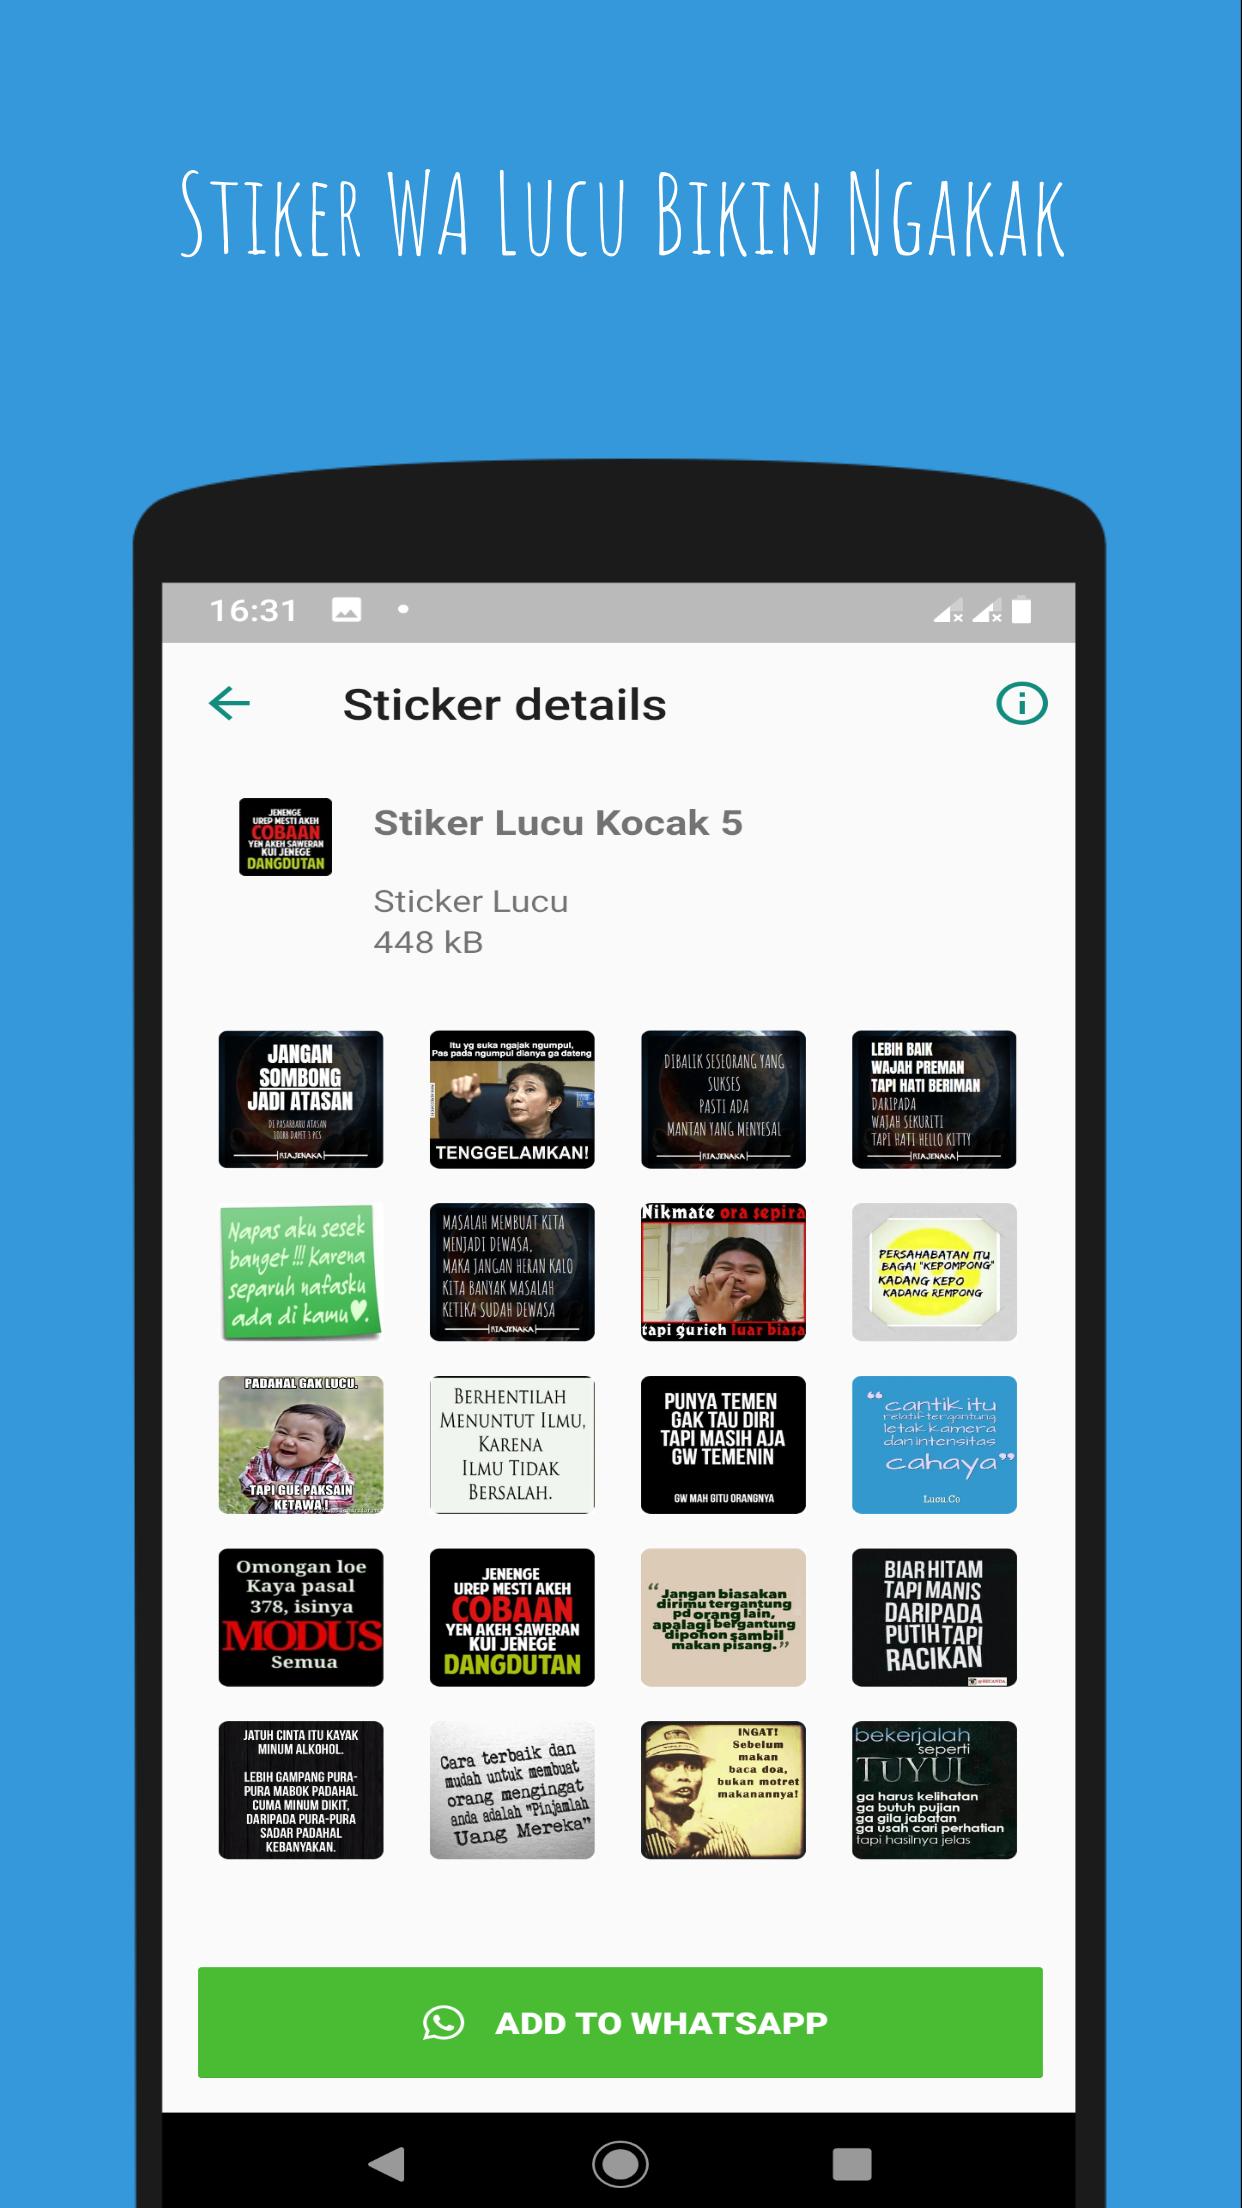 Stiker Wa Lucu Bikin Ngakak For Android Apk Download